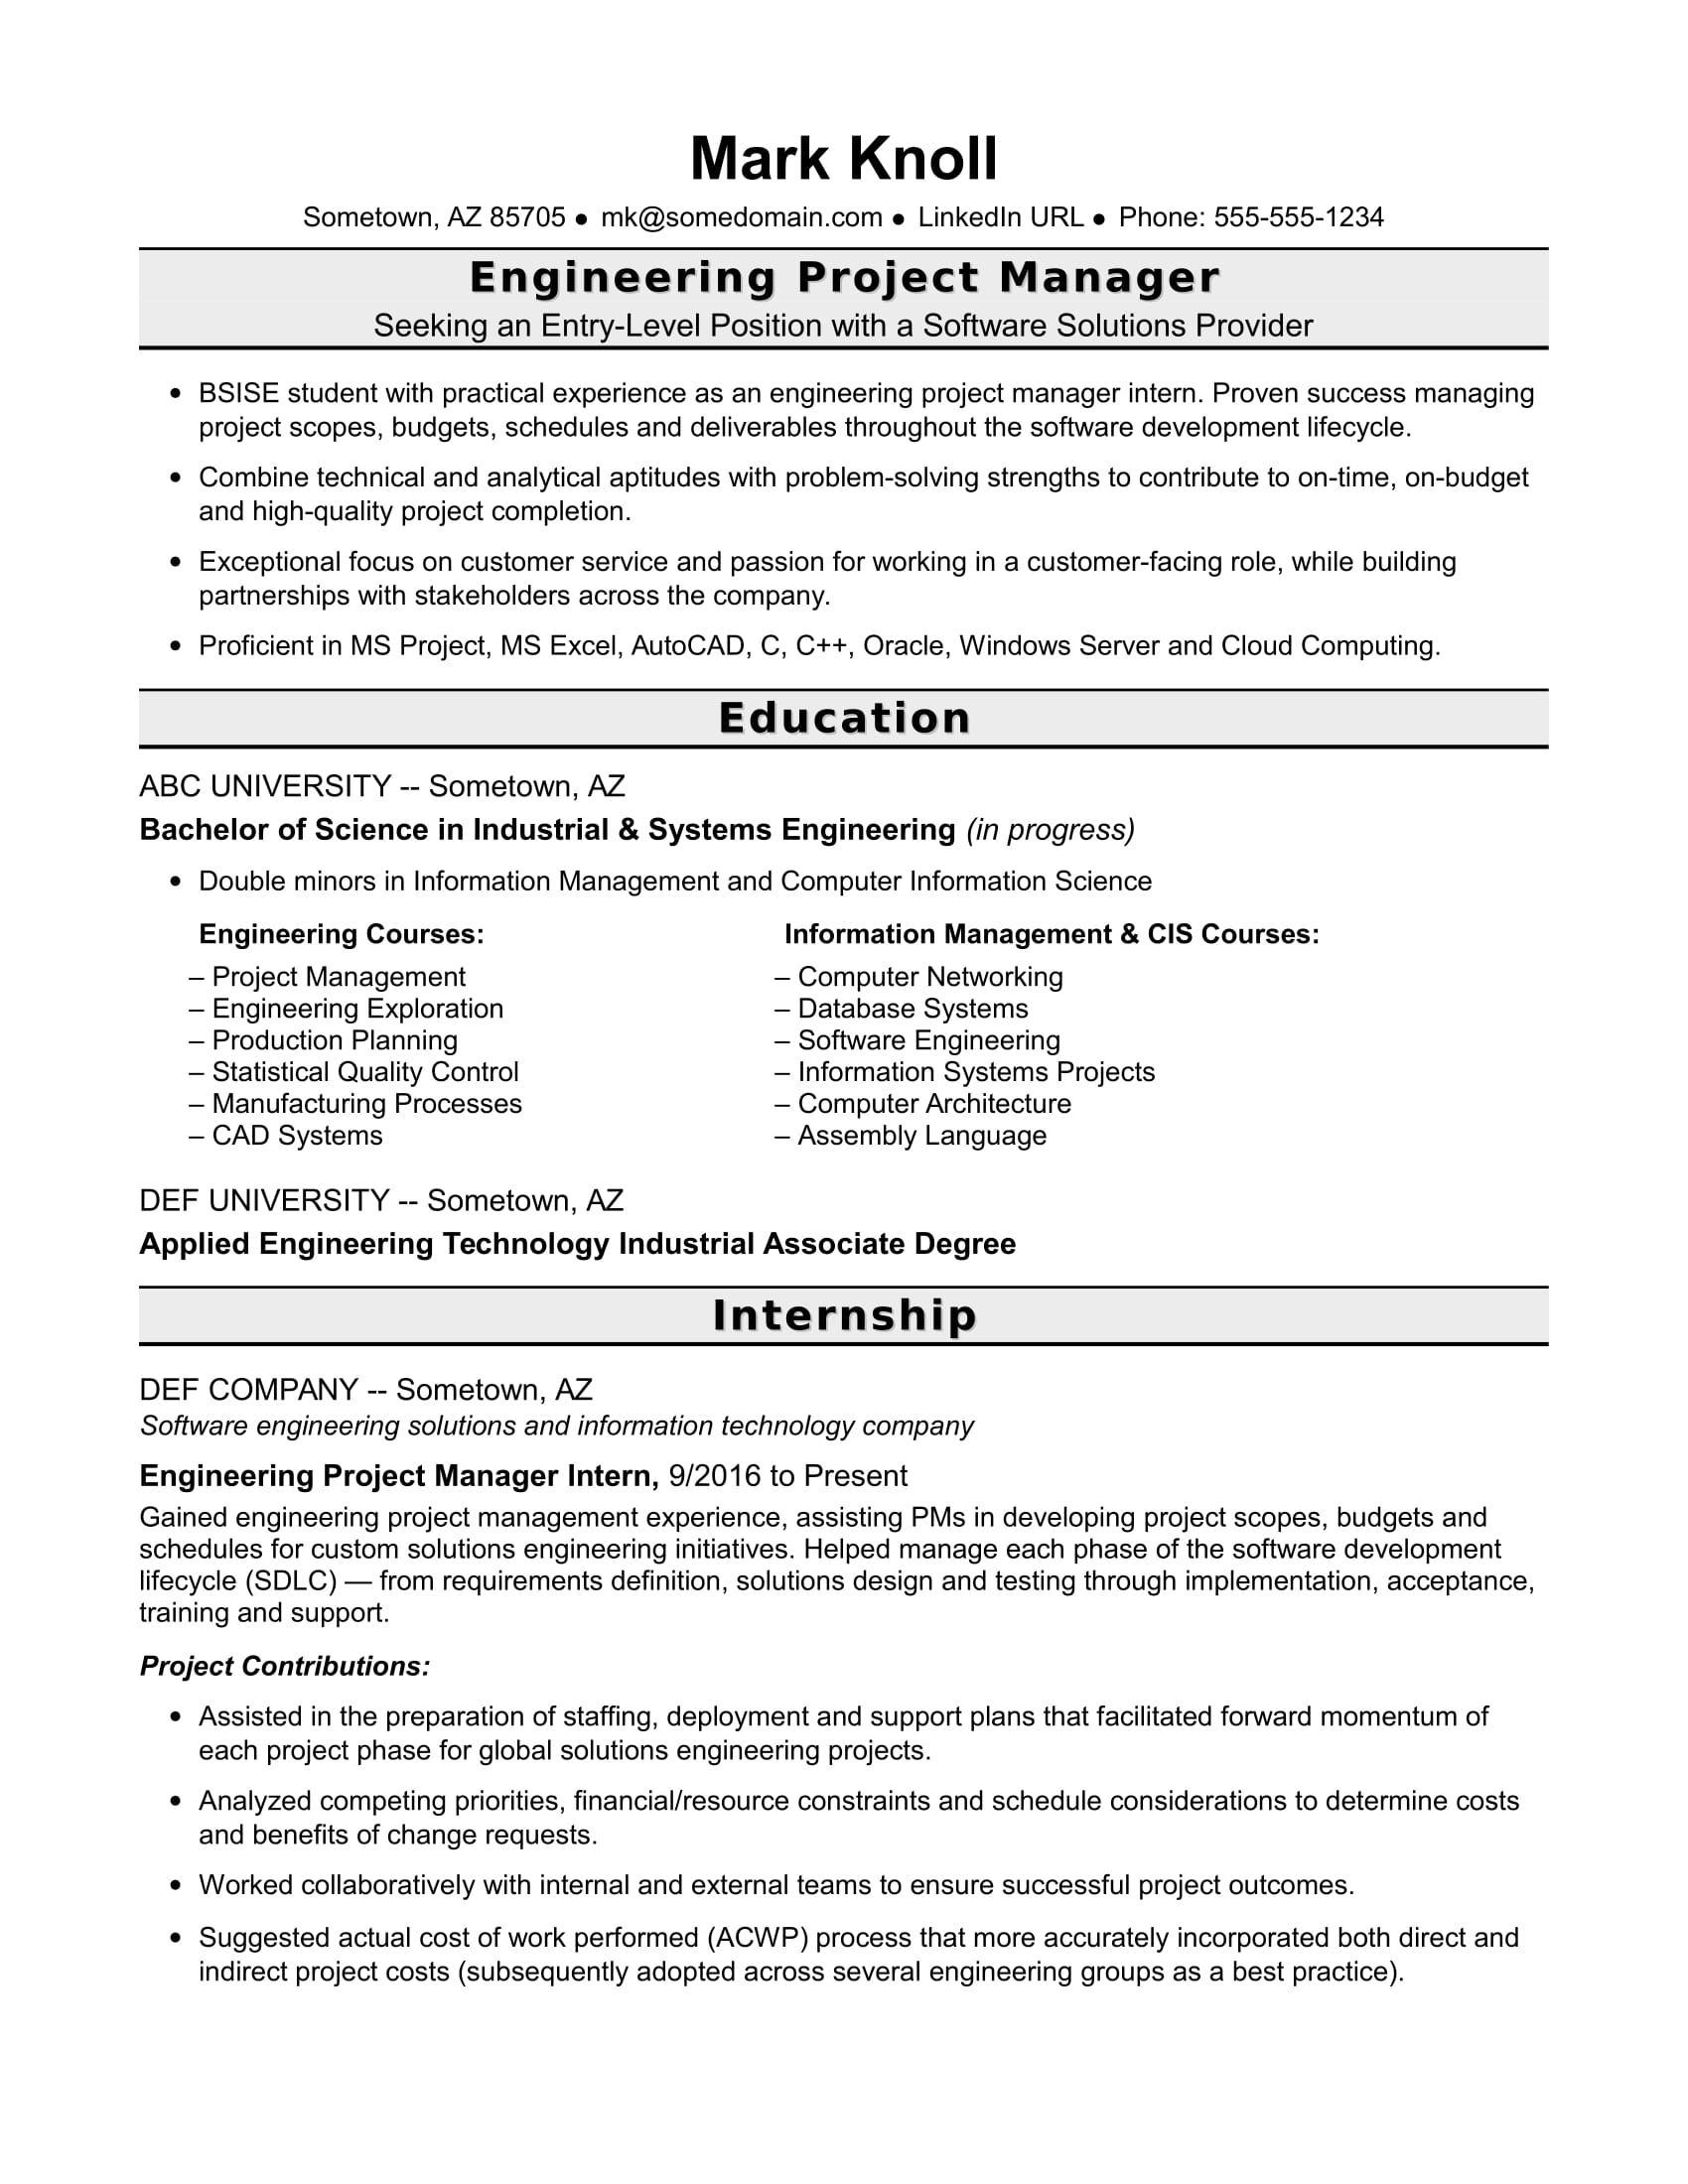 Entry level program manager jobs